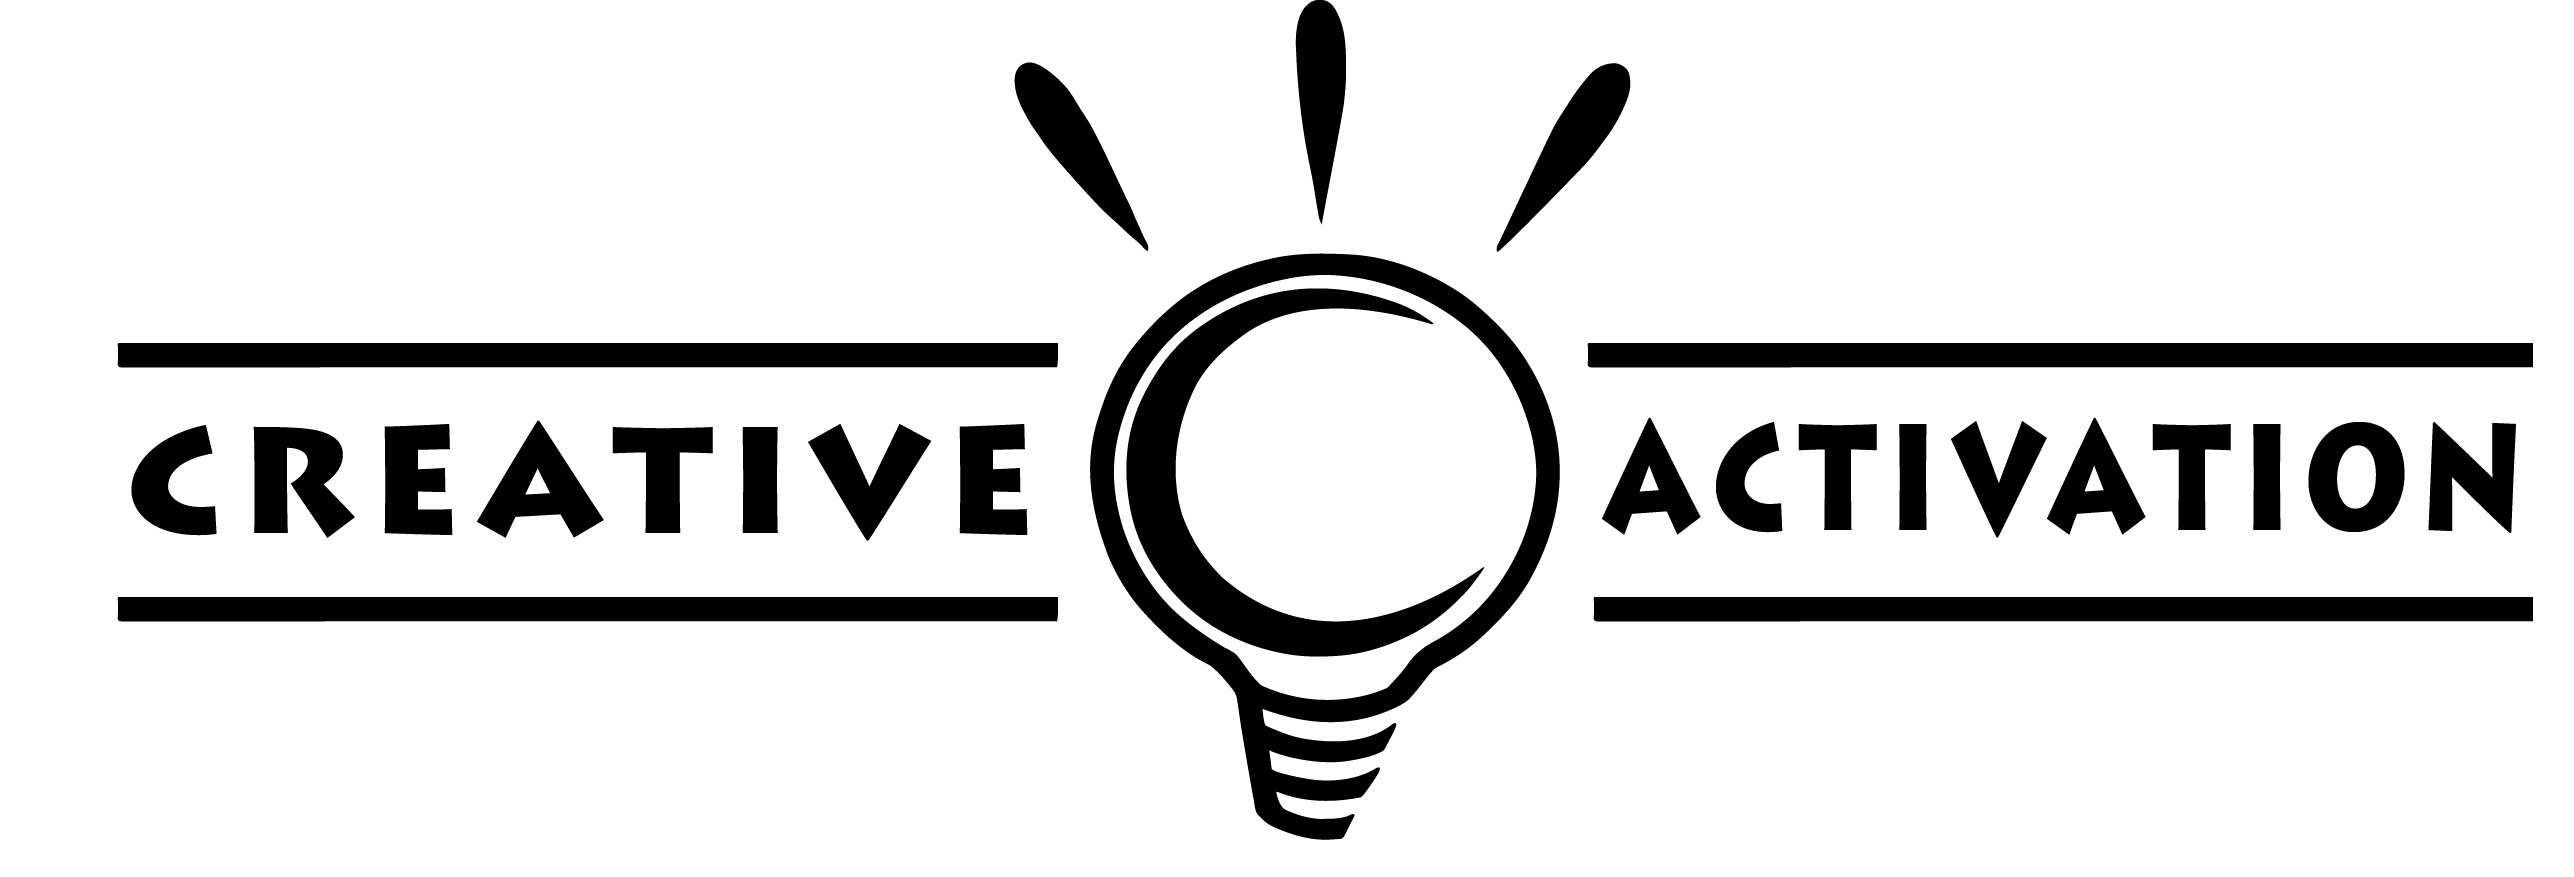 Creative Activation logo